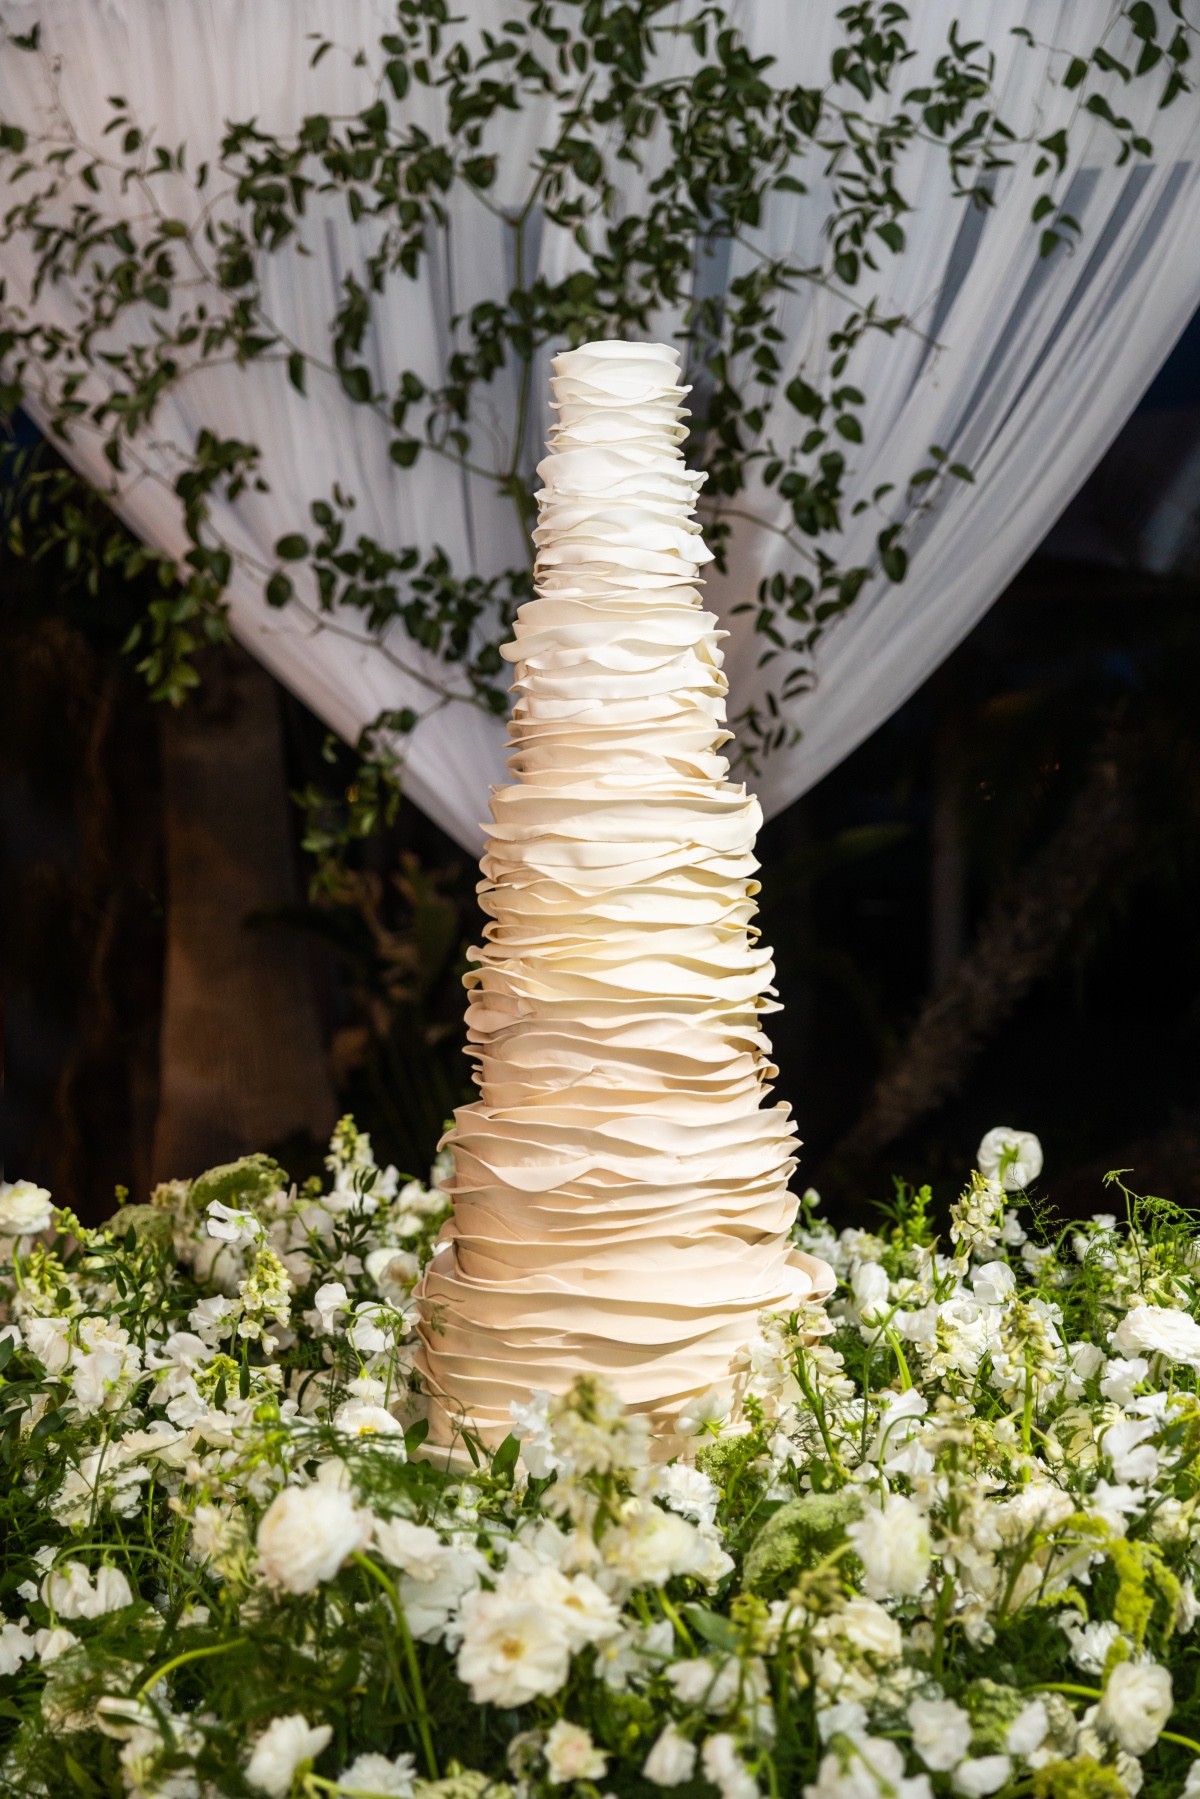 7 tier wedding cake